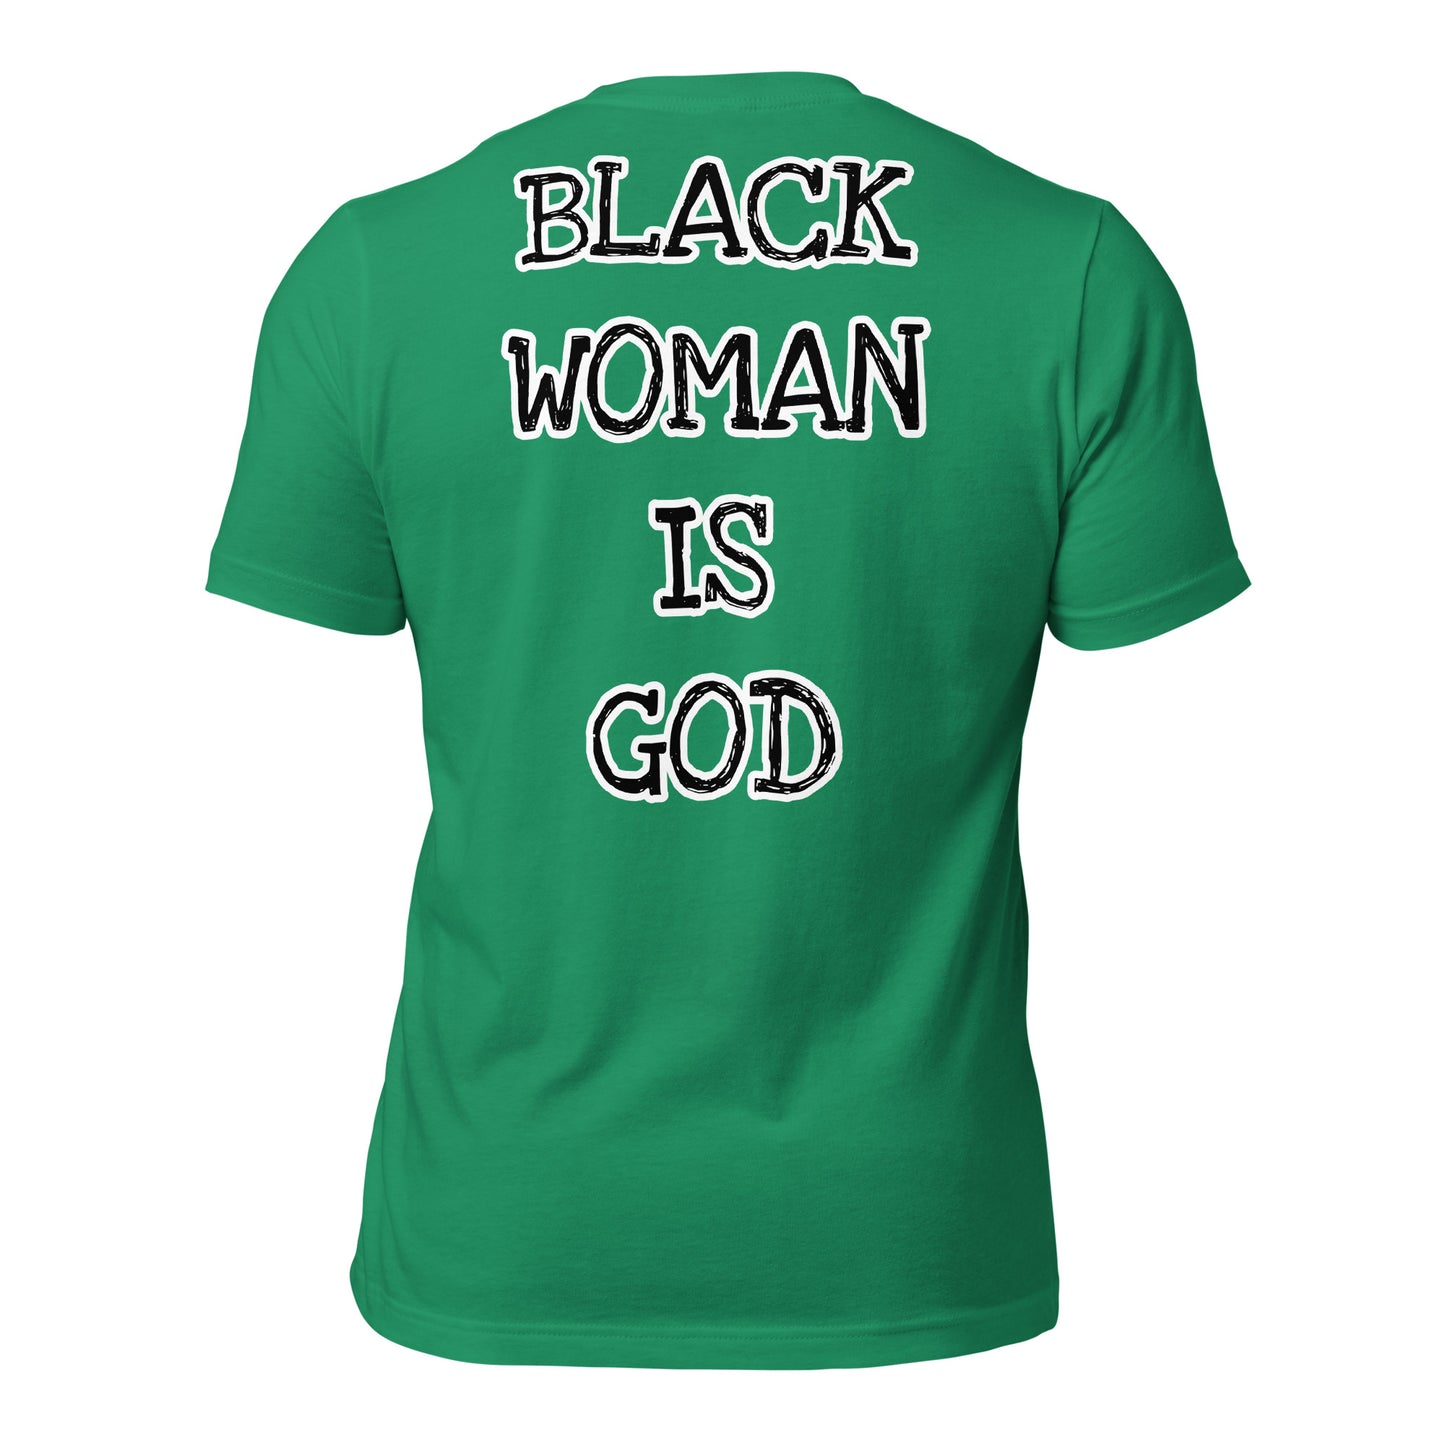 BLACK WOMAN IS GOD